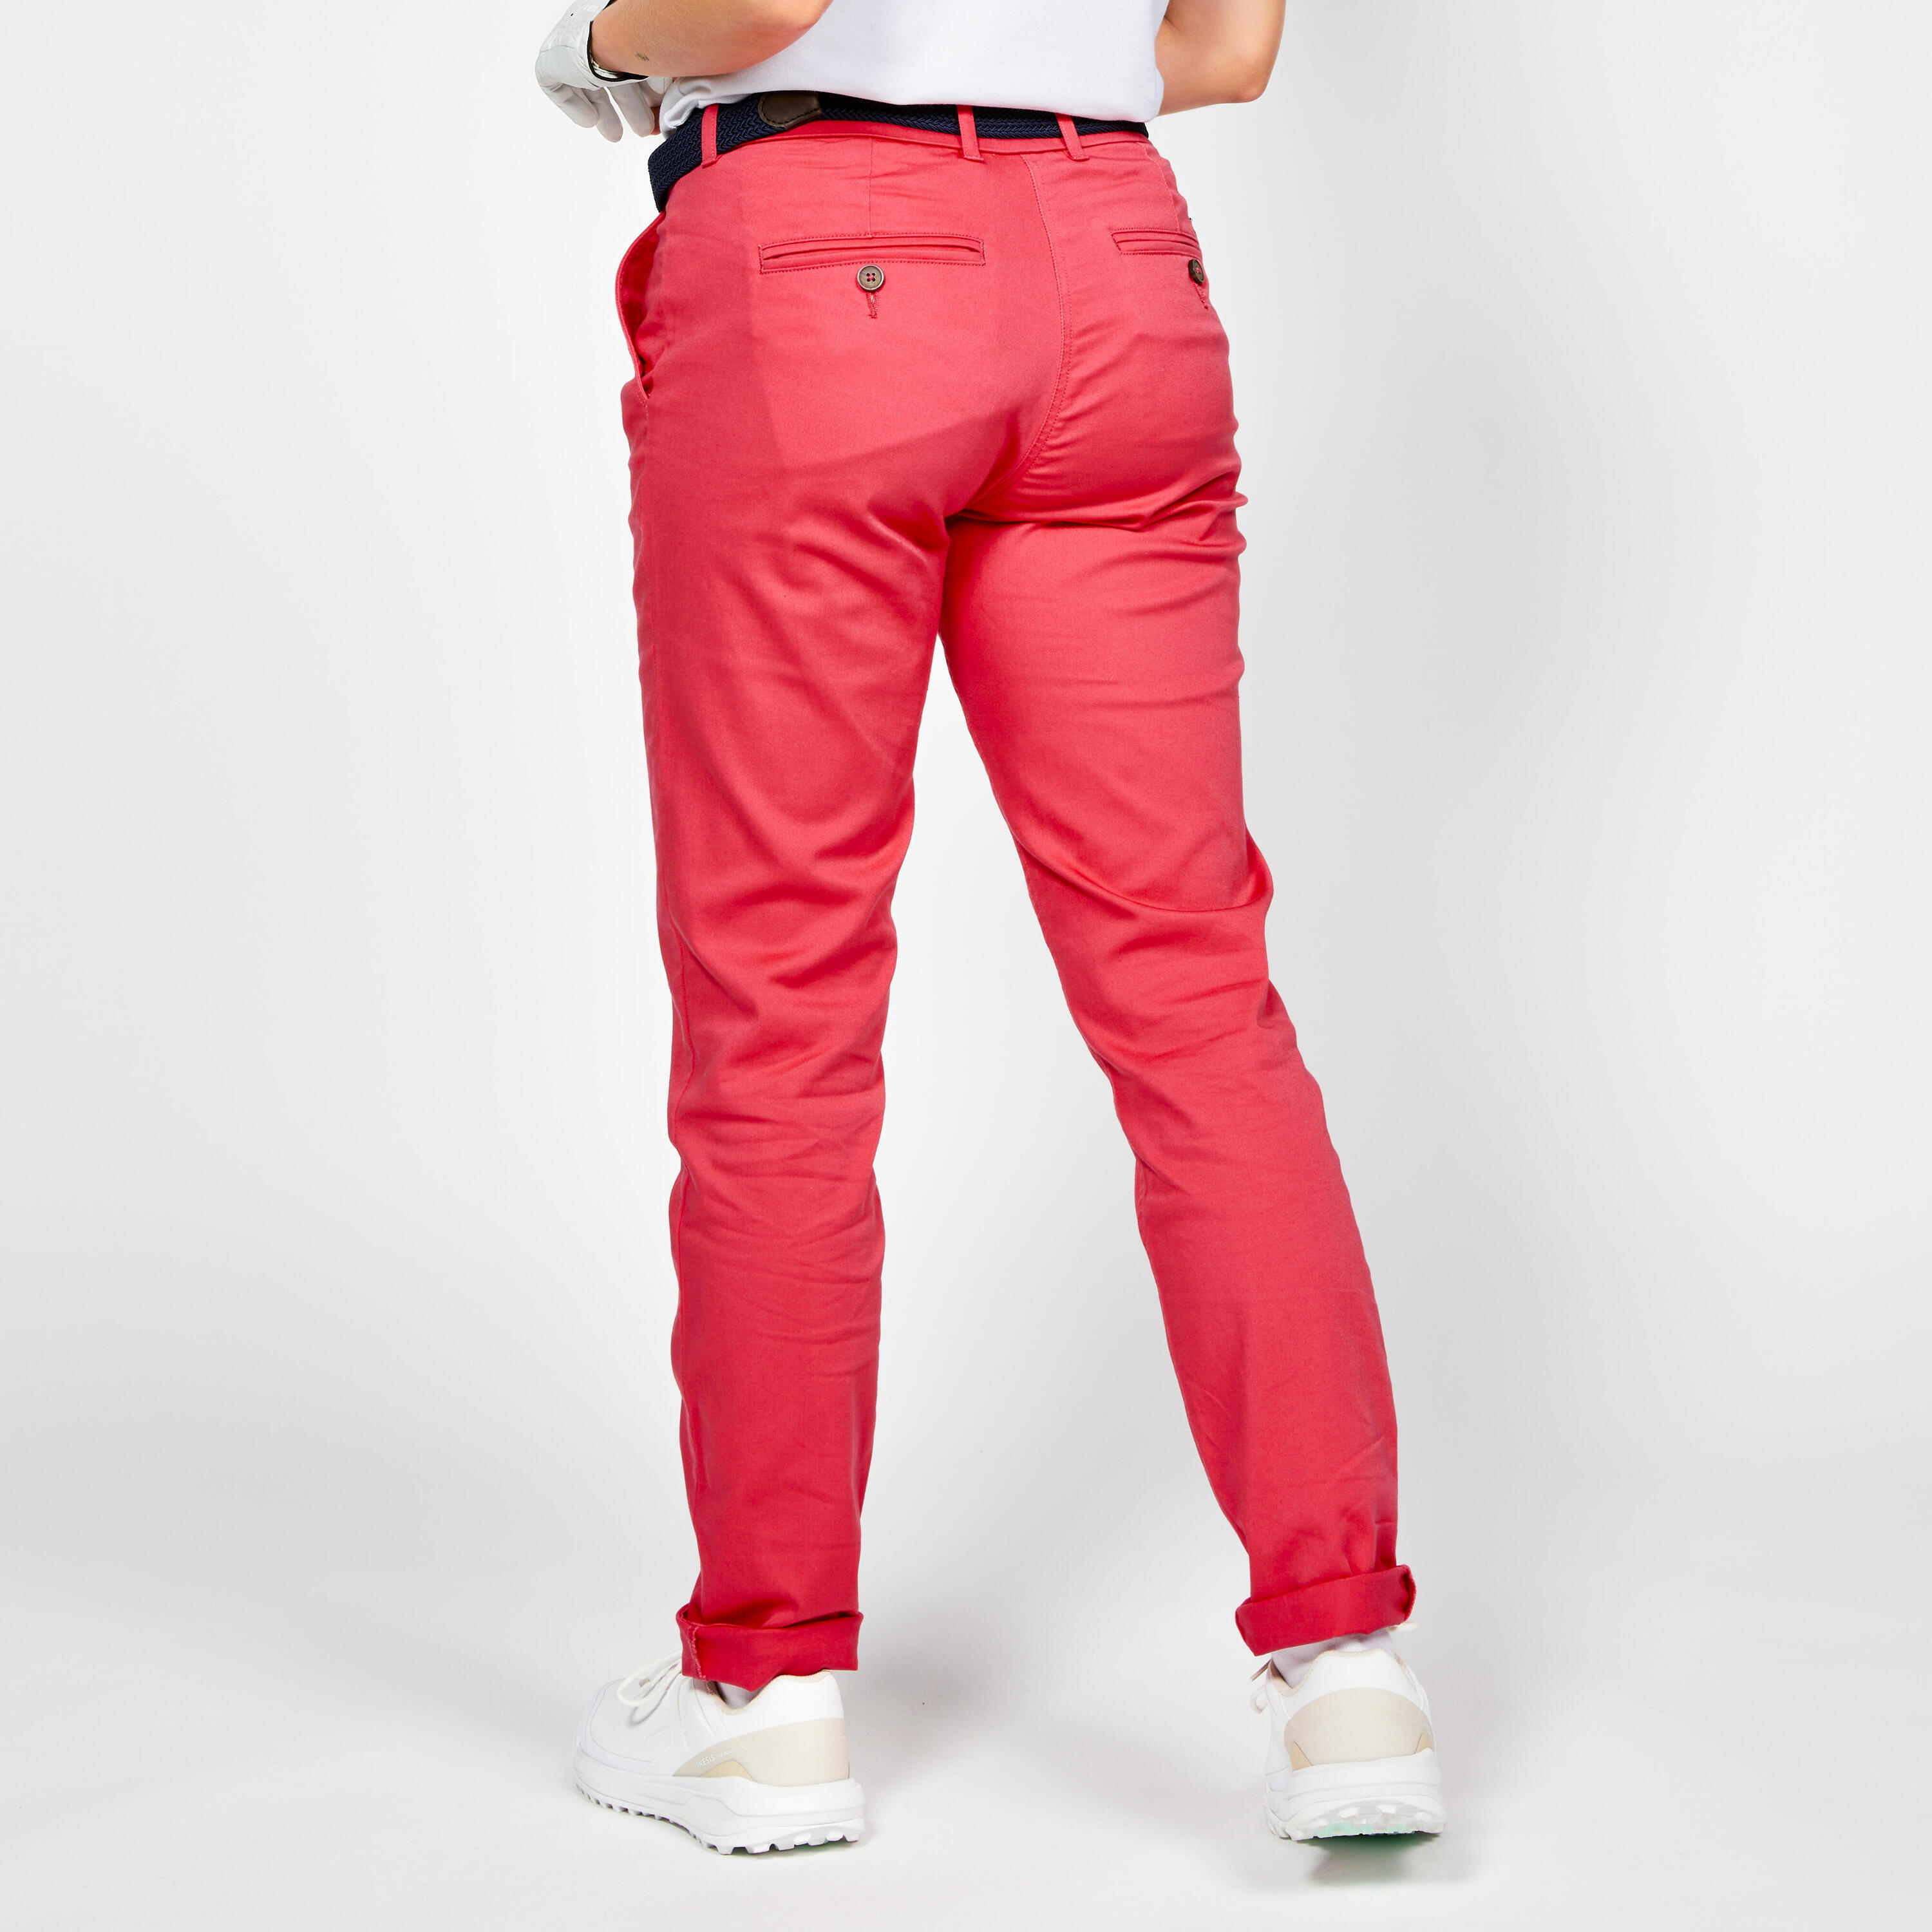 Women's Golf Cotton Chino Trousers - MW500 Pink 2/4